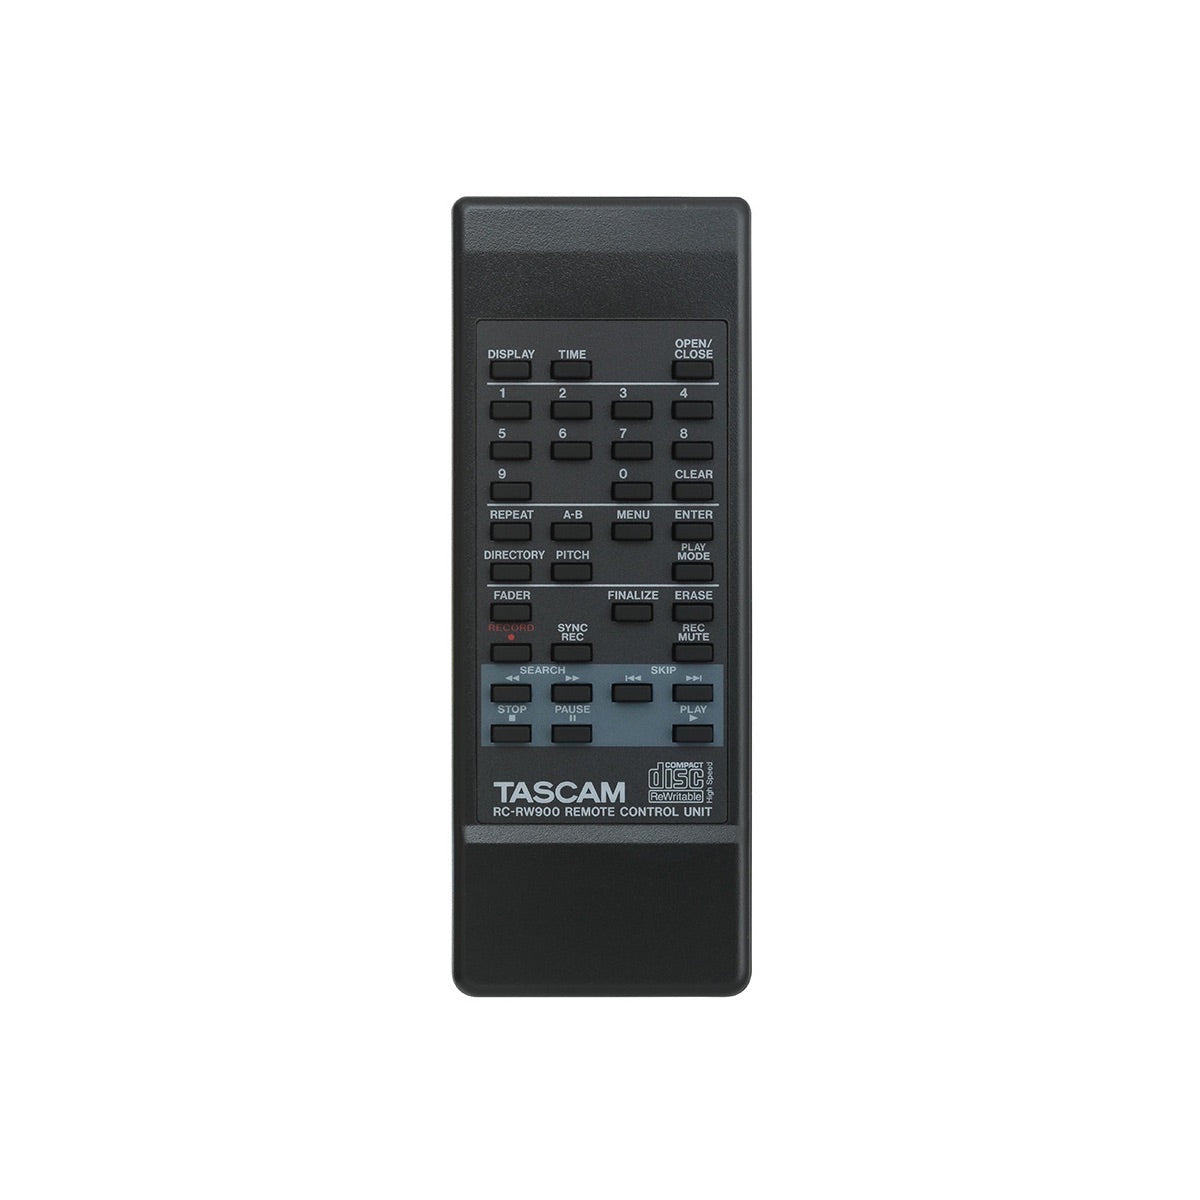 Tascam CD-RW900SX - Professional CD Recorder/Player, RC-RW900 remote control